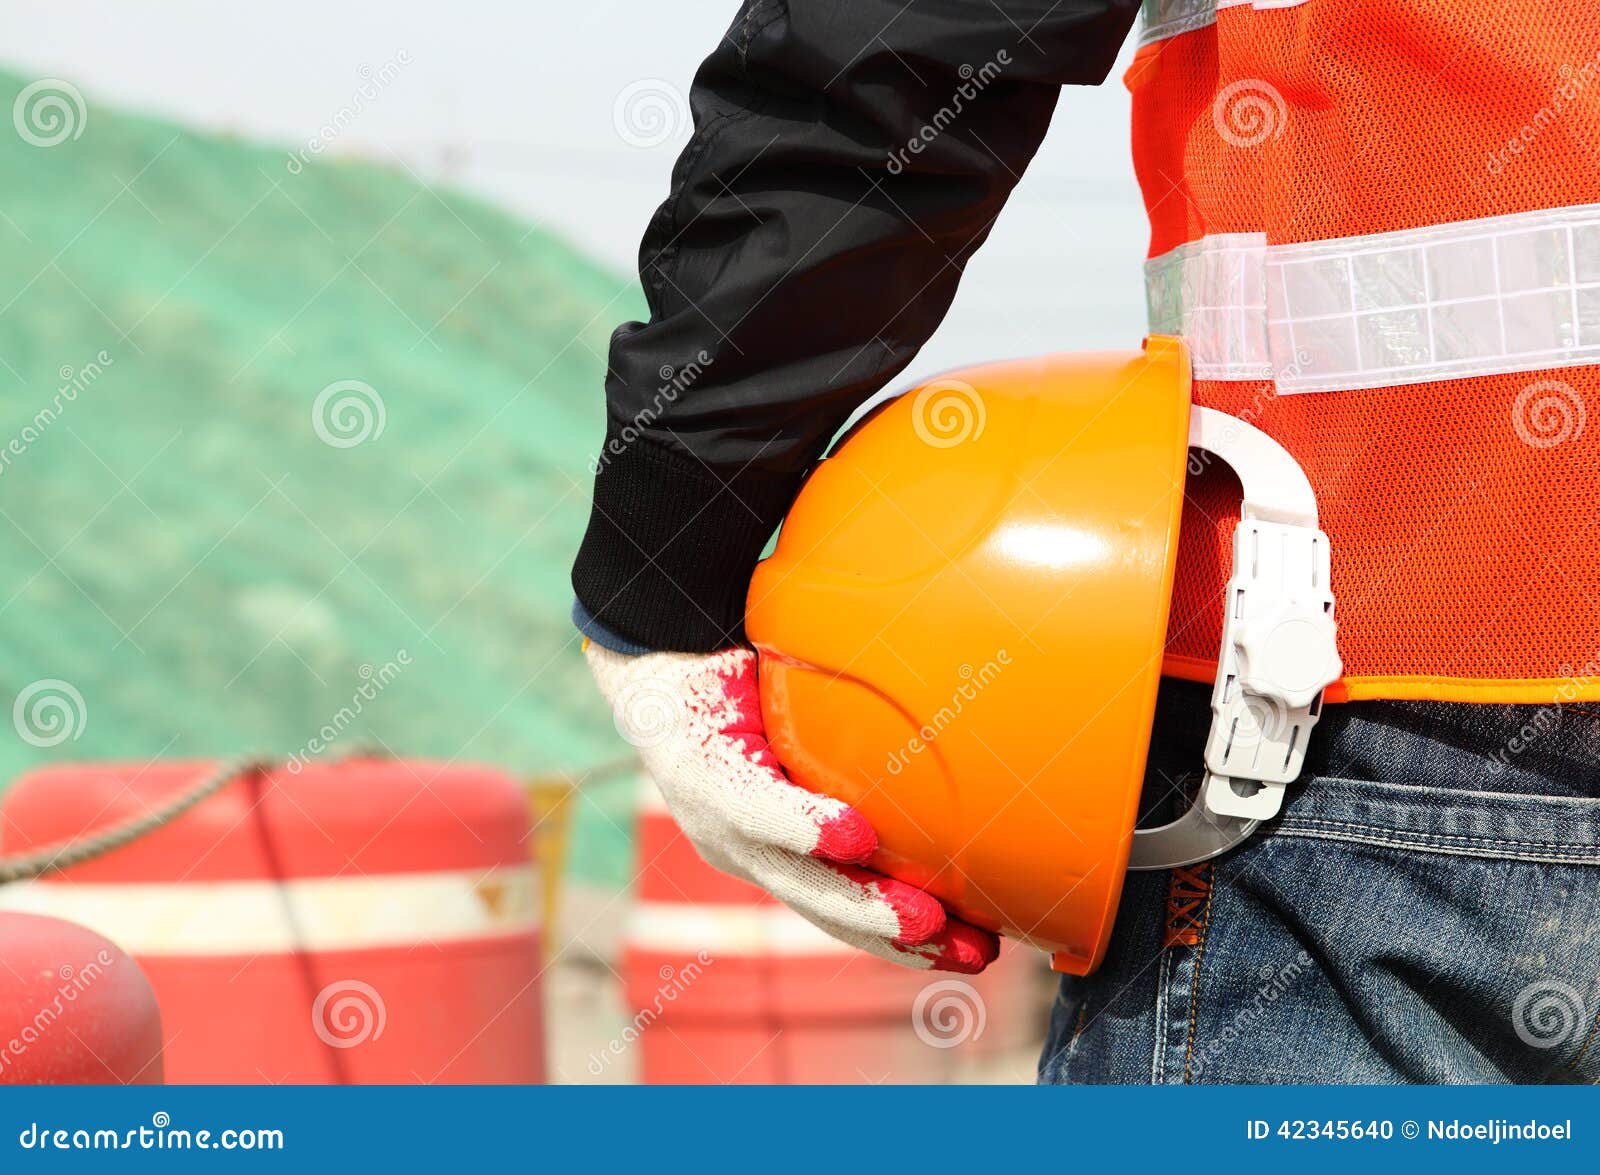 safety work concept, construction worker holding helmet